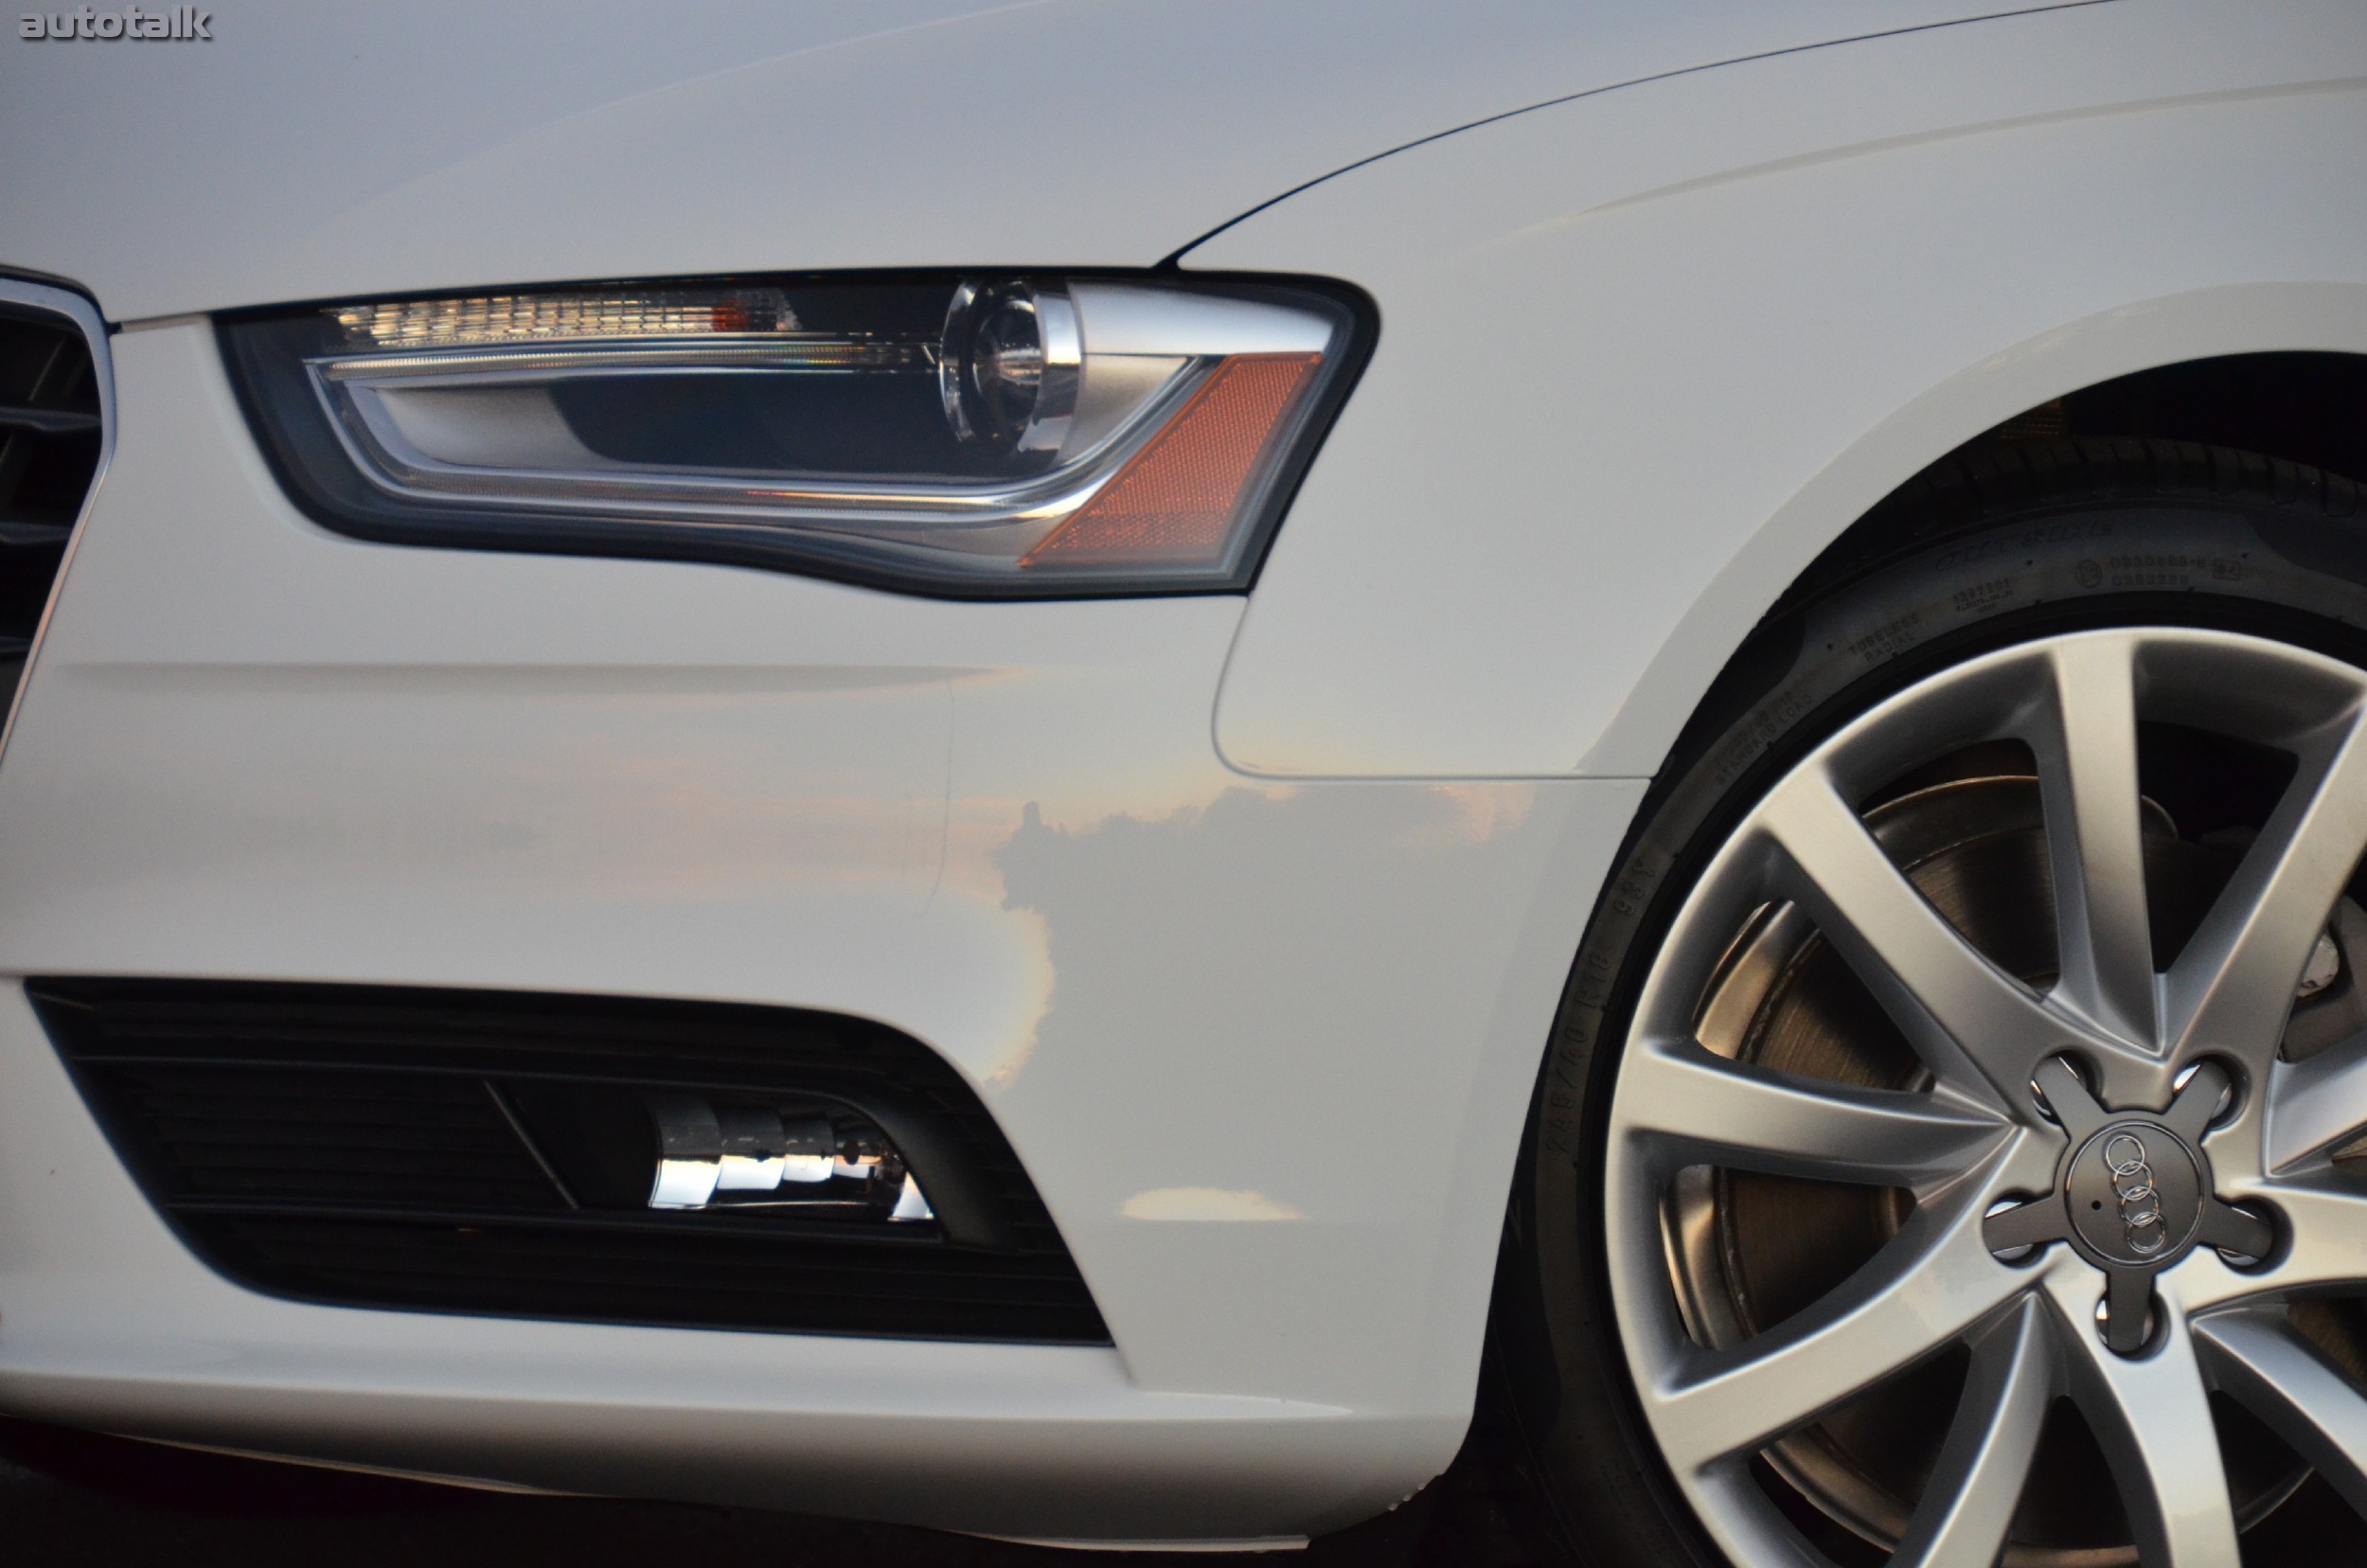 2013 Audi A4 Review